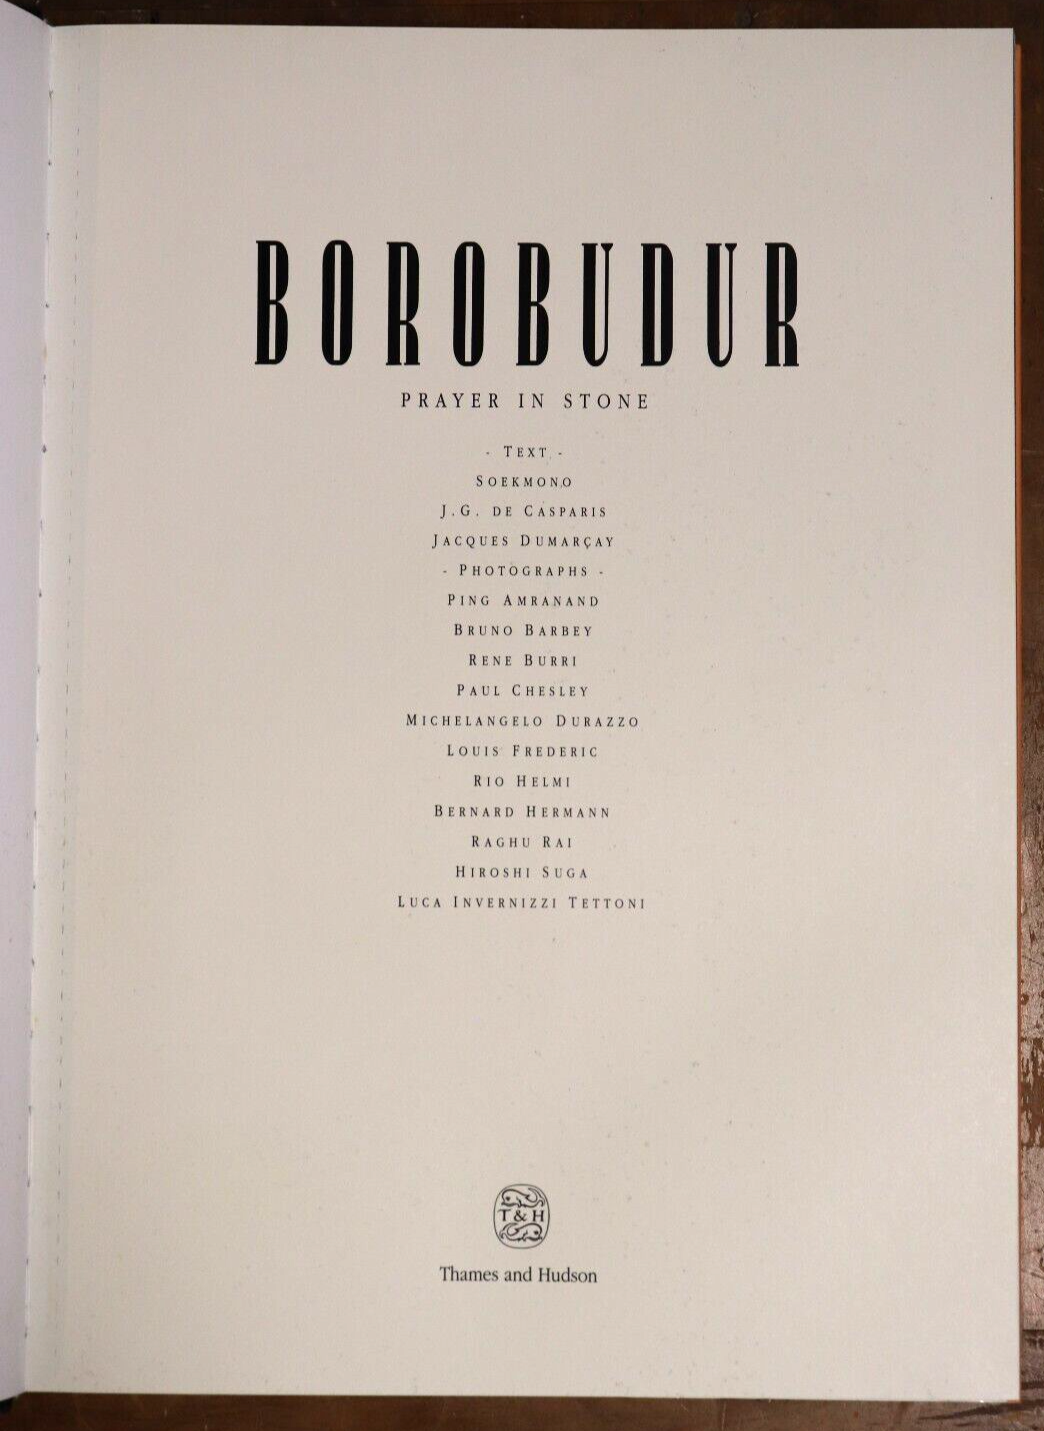 1990 Borobudor: Prayer in Stone Indonesia Buddhist History Book - 0